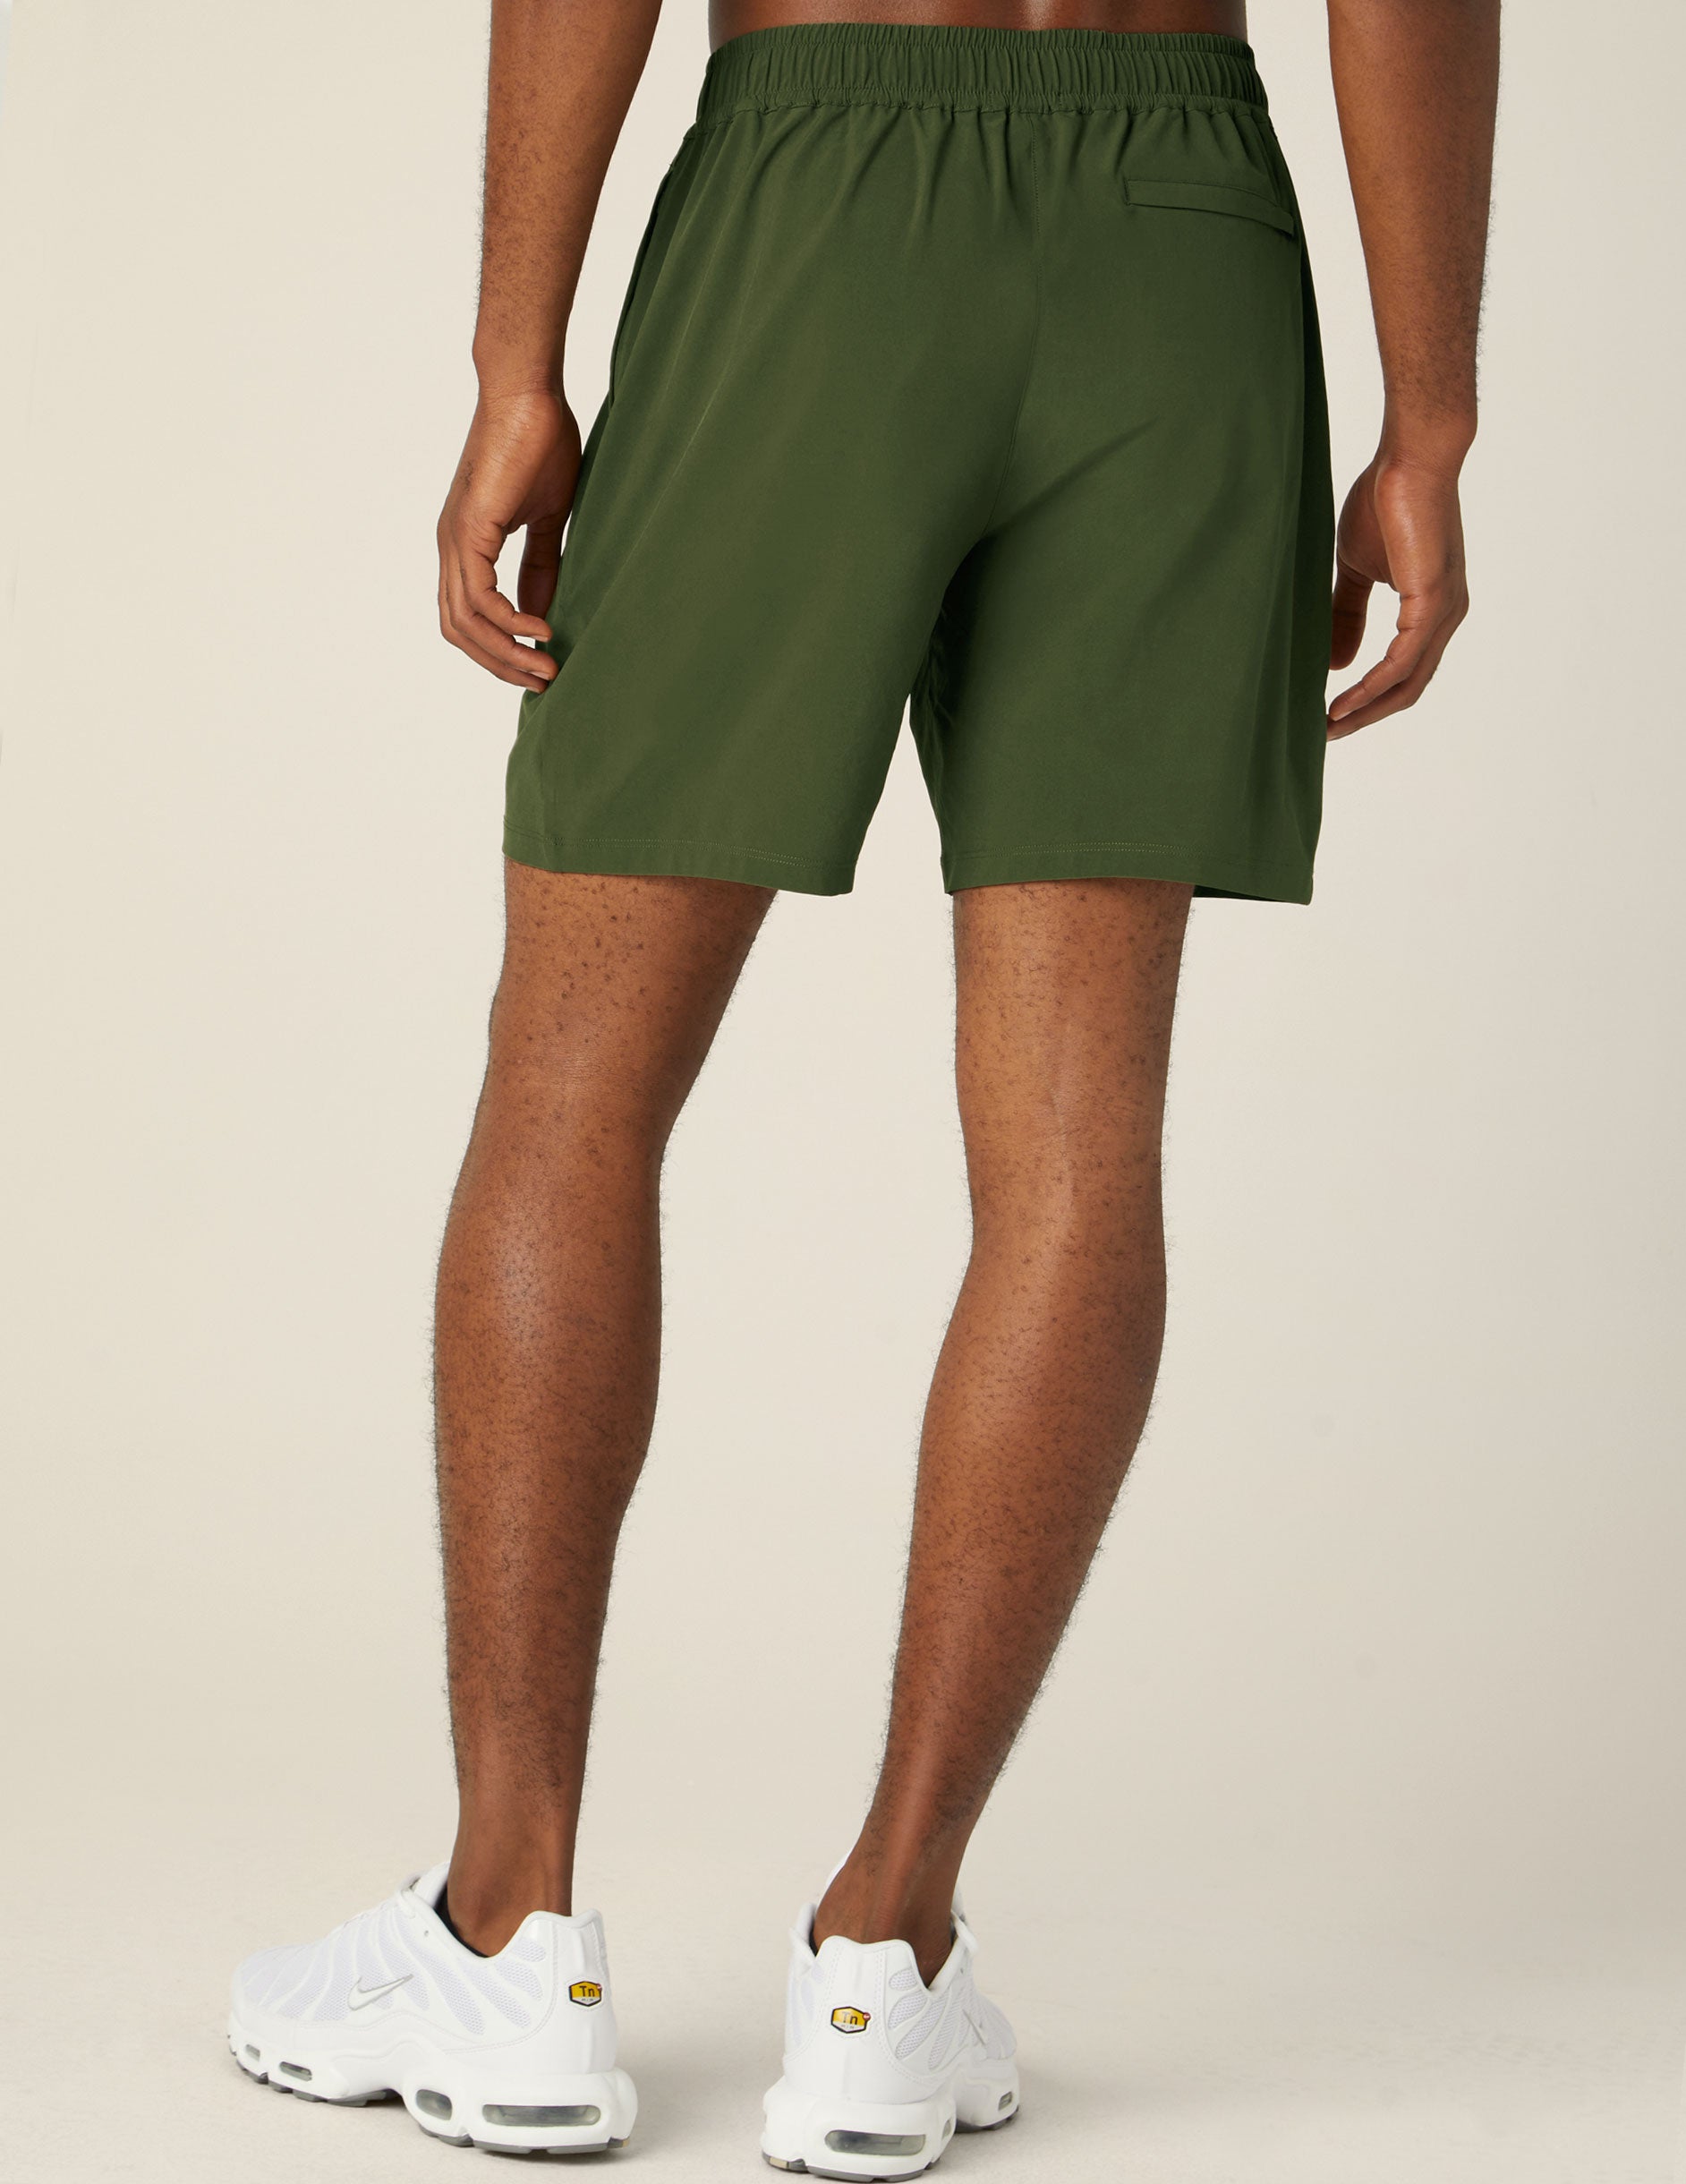 green mens shorts with back pockets.